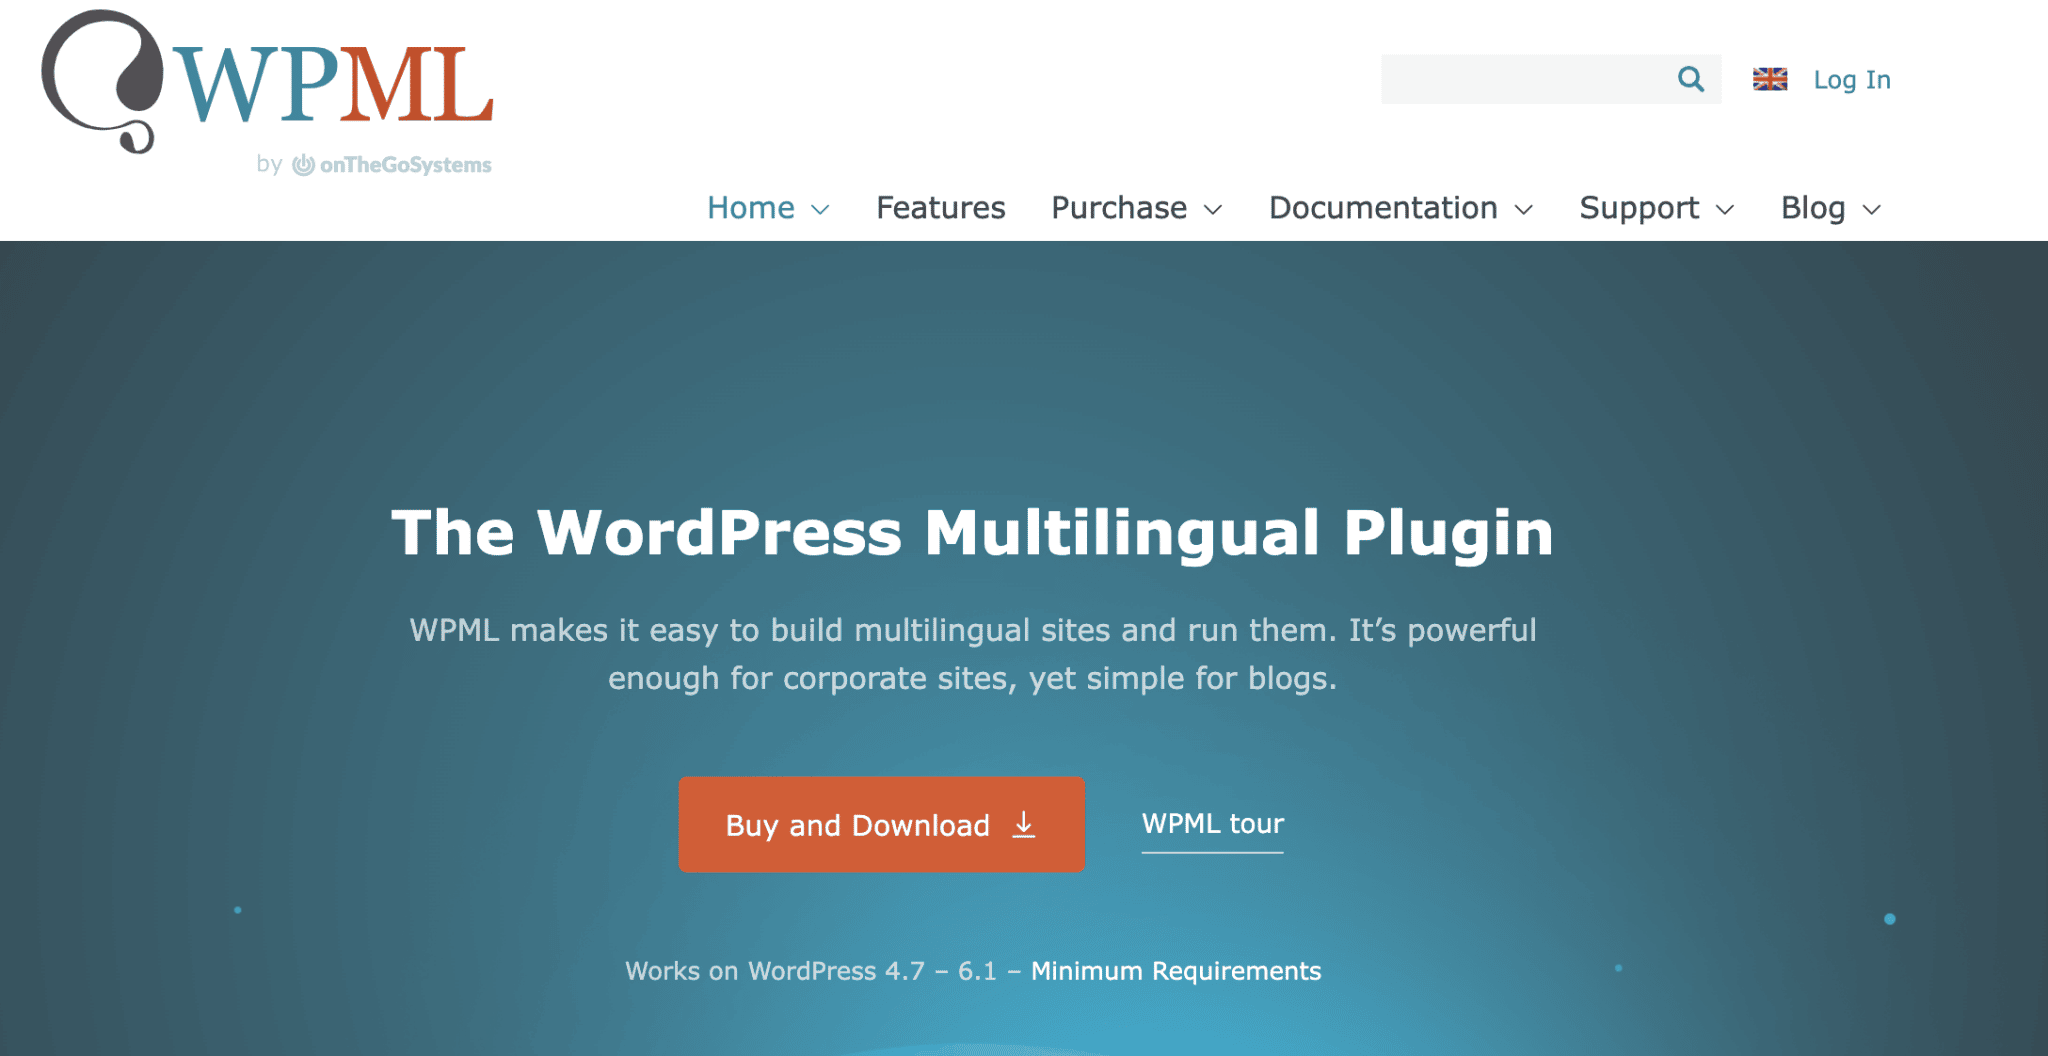 WordPress multilingual plugin WPML dashboard website.